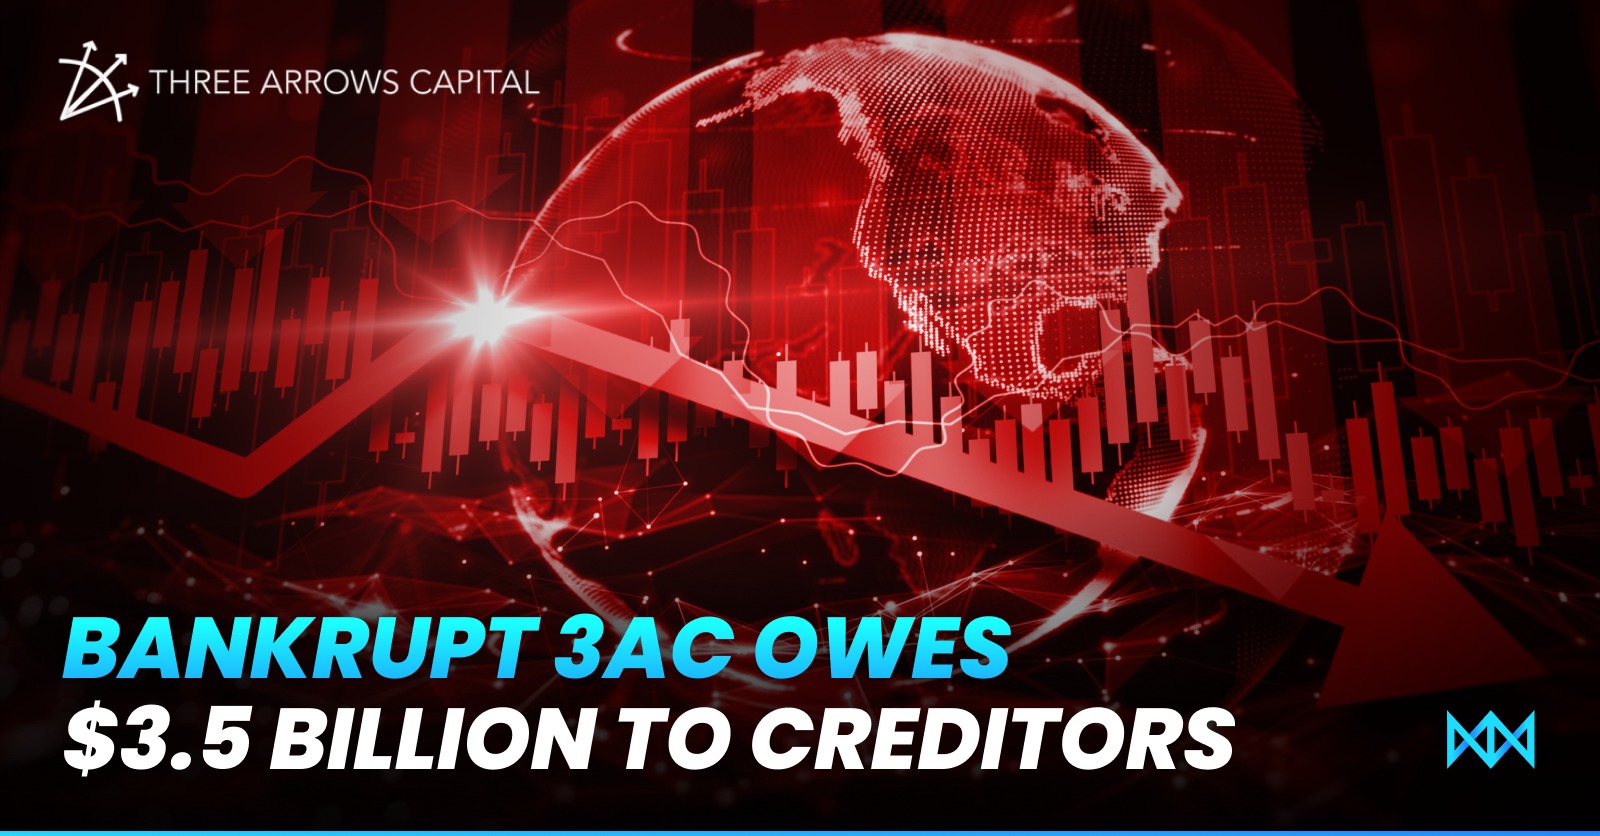 Bankrupt Three Arrows Capital owes $3.5 billion to creditors, including $2.3 billion to Genesis